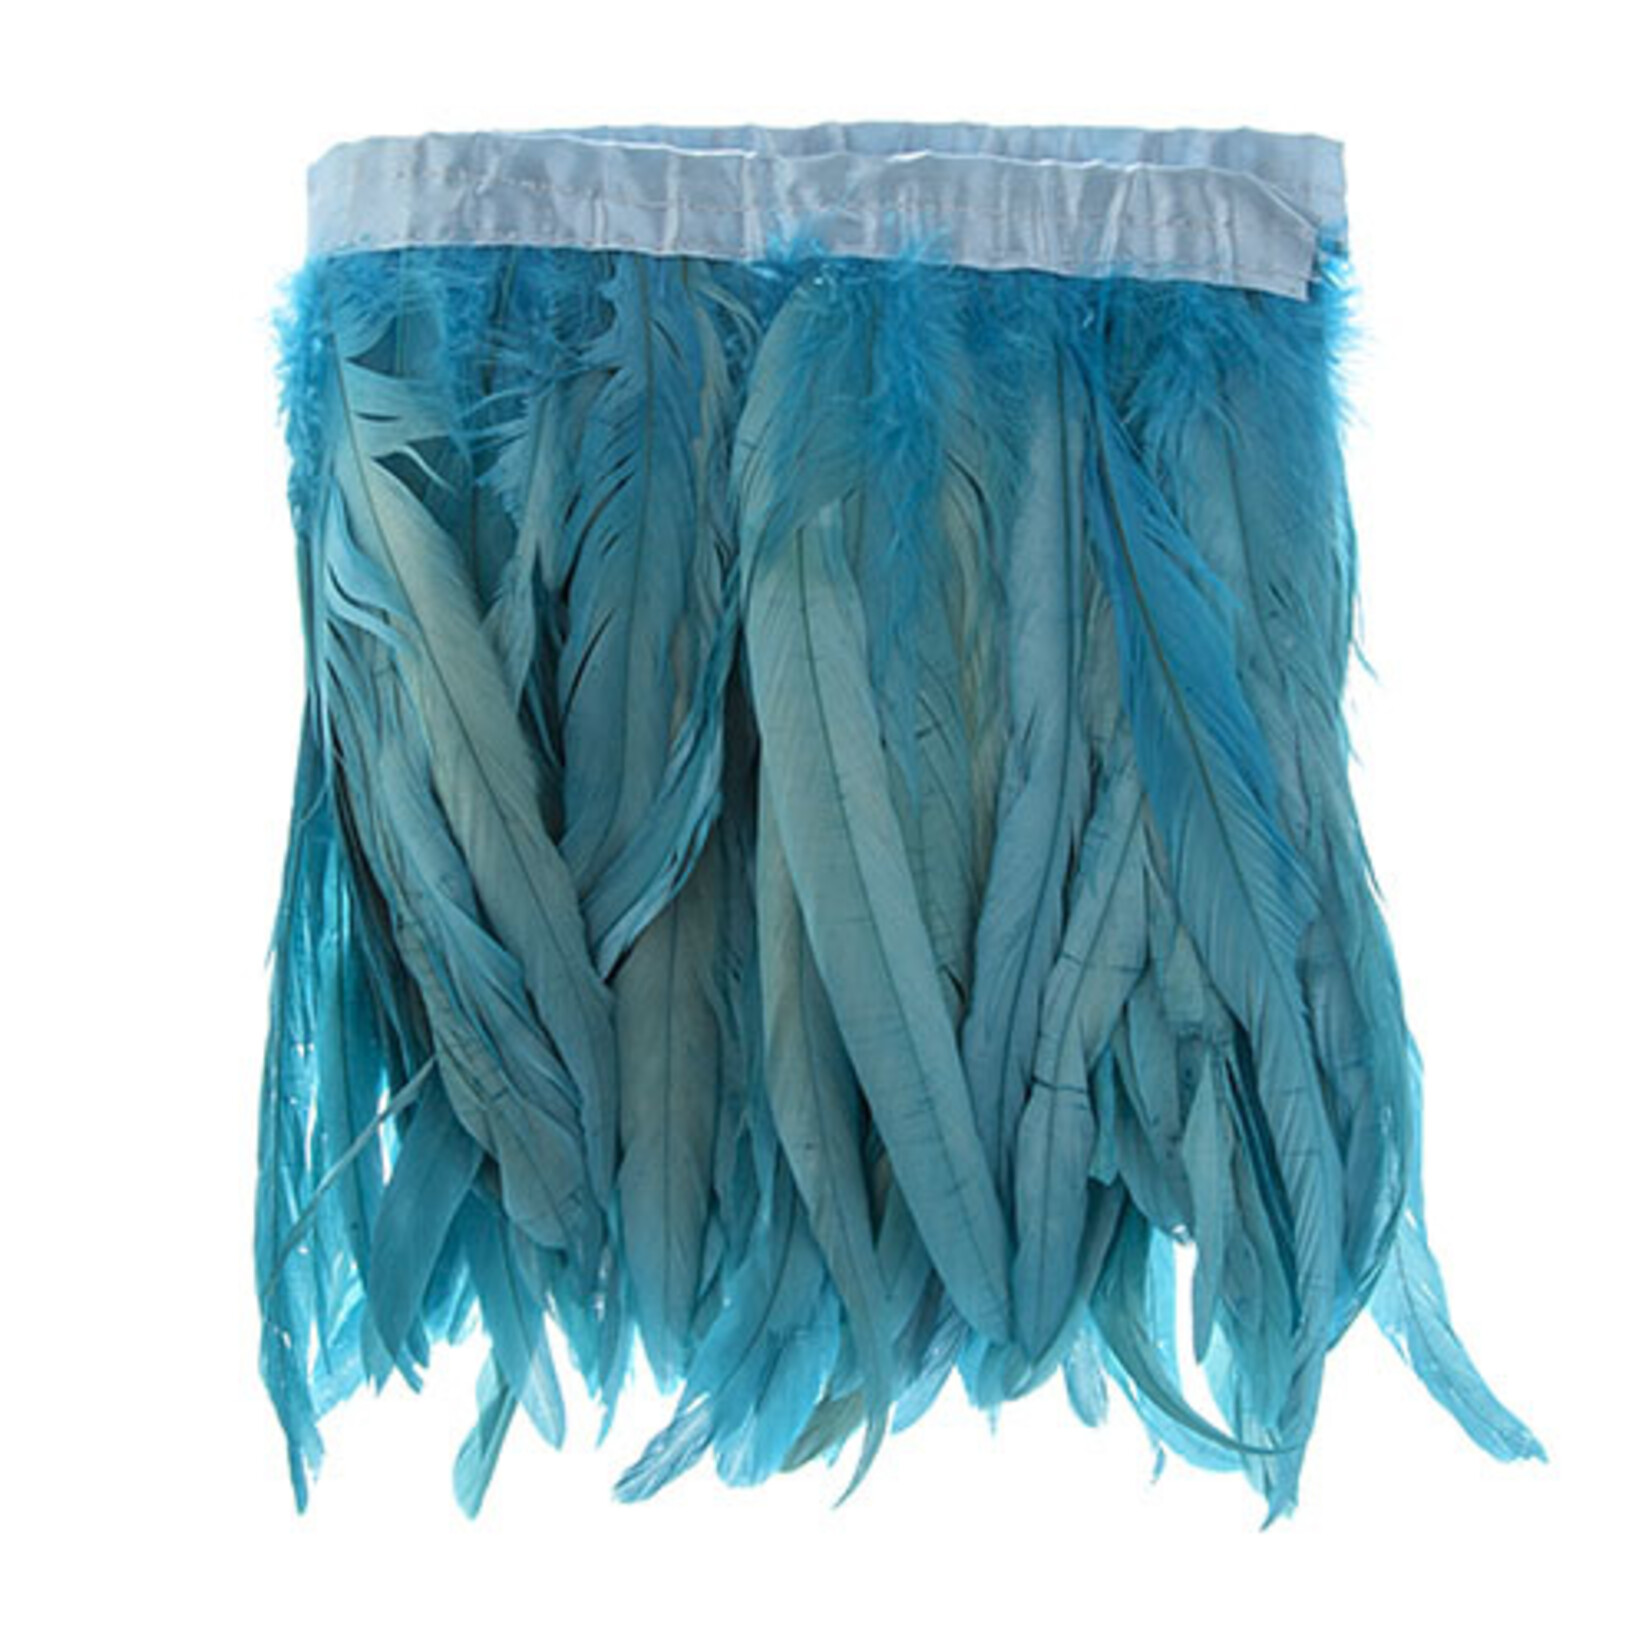 Coque Feathers Value 8-10 Inches 1 Yard  Aqua Blue